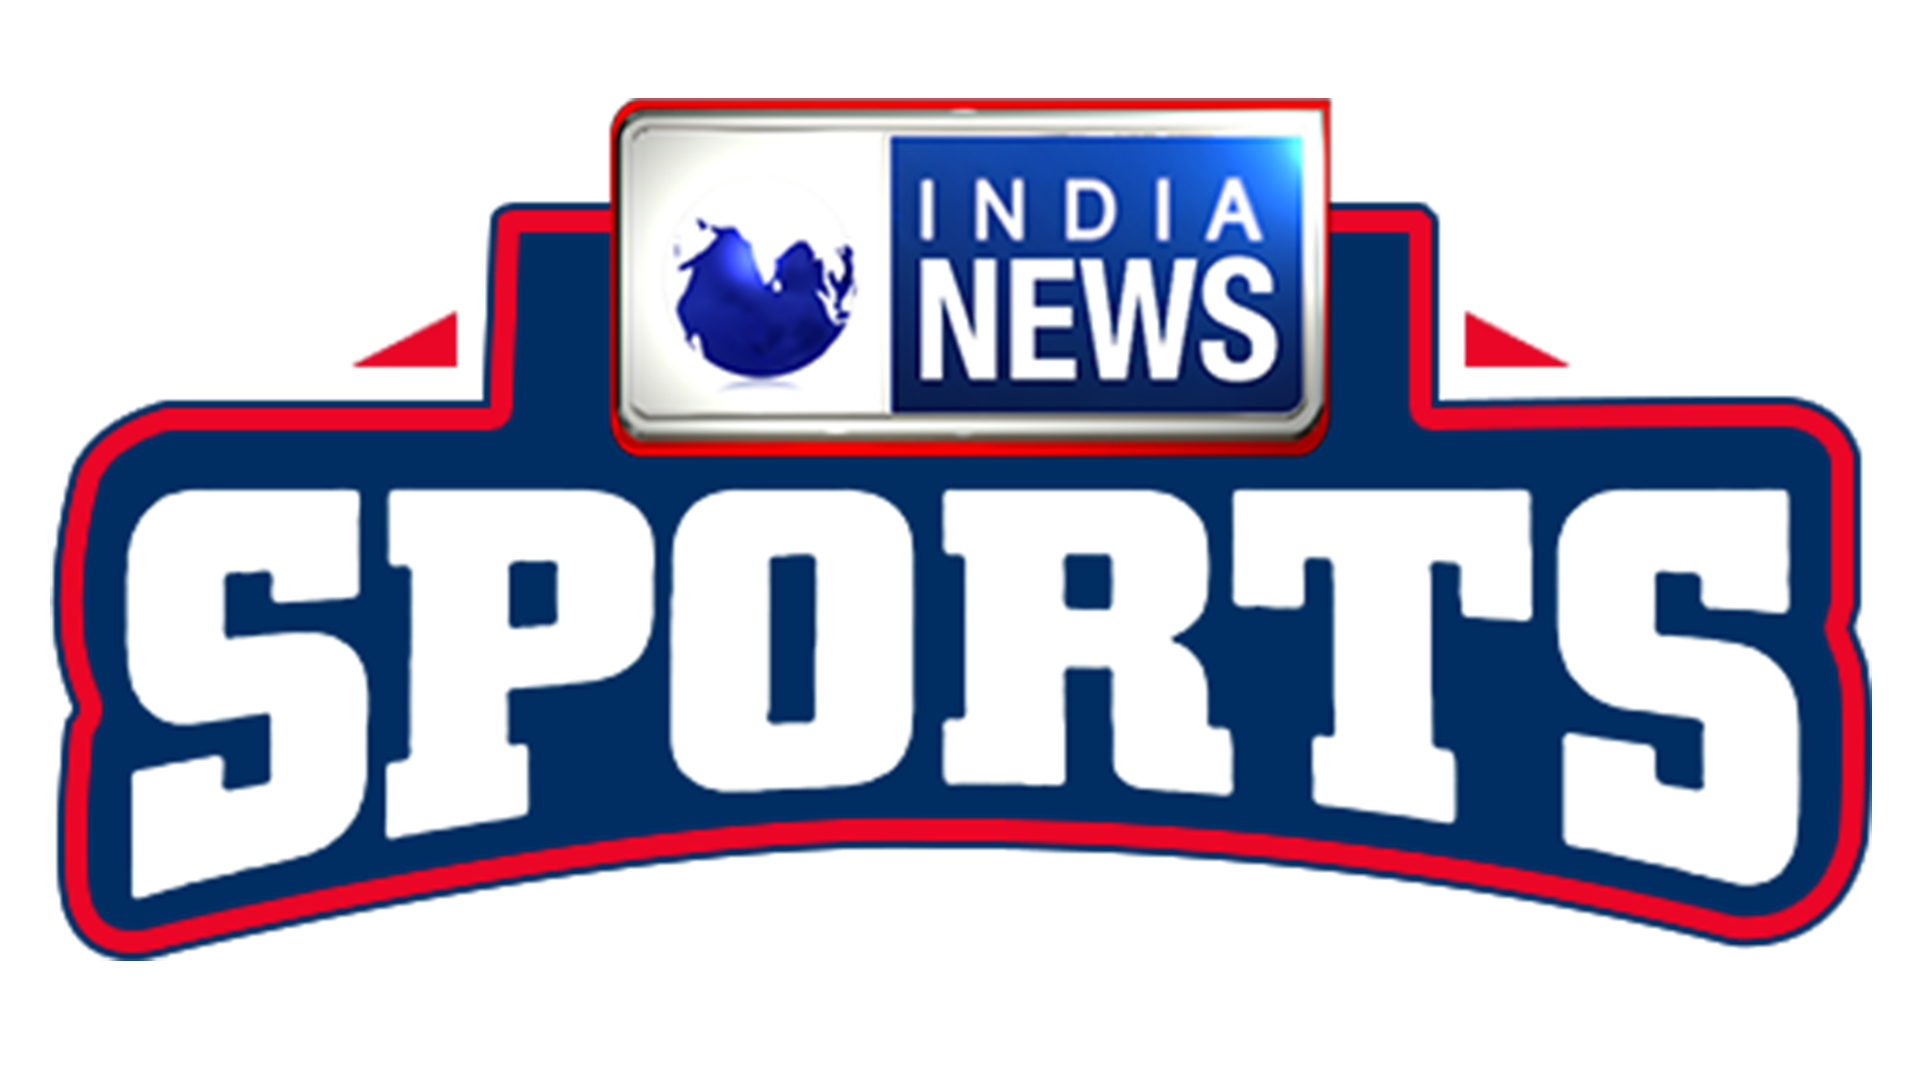 India News Sports